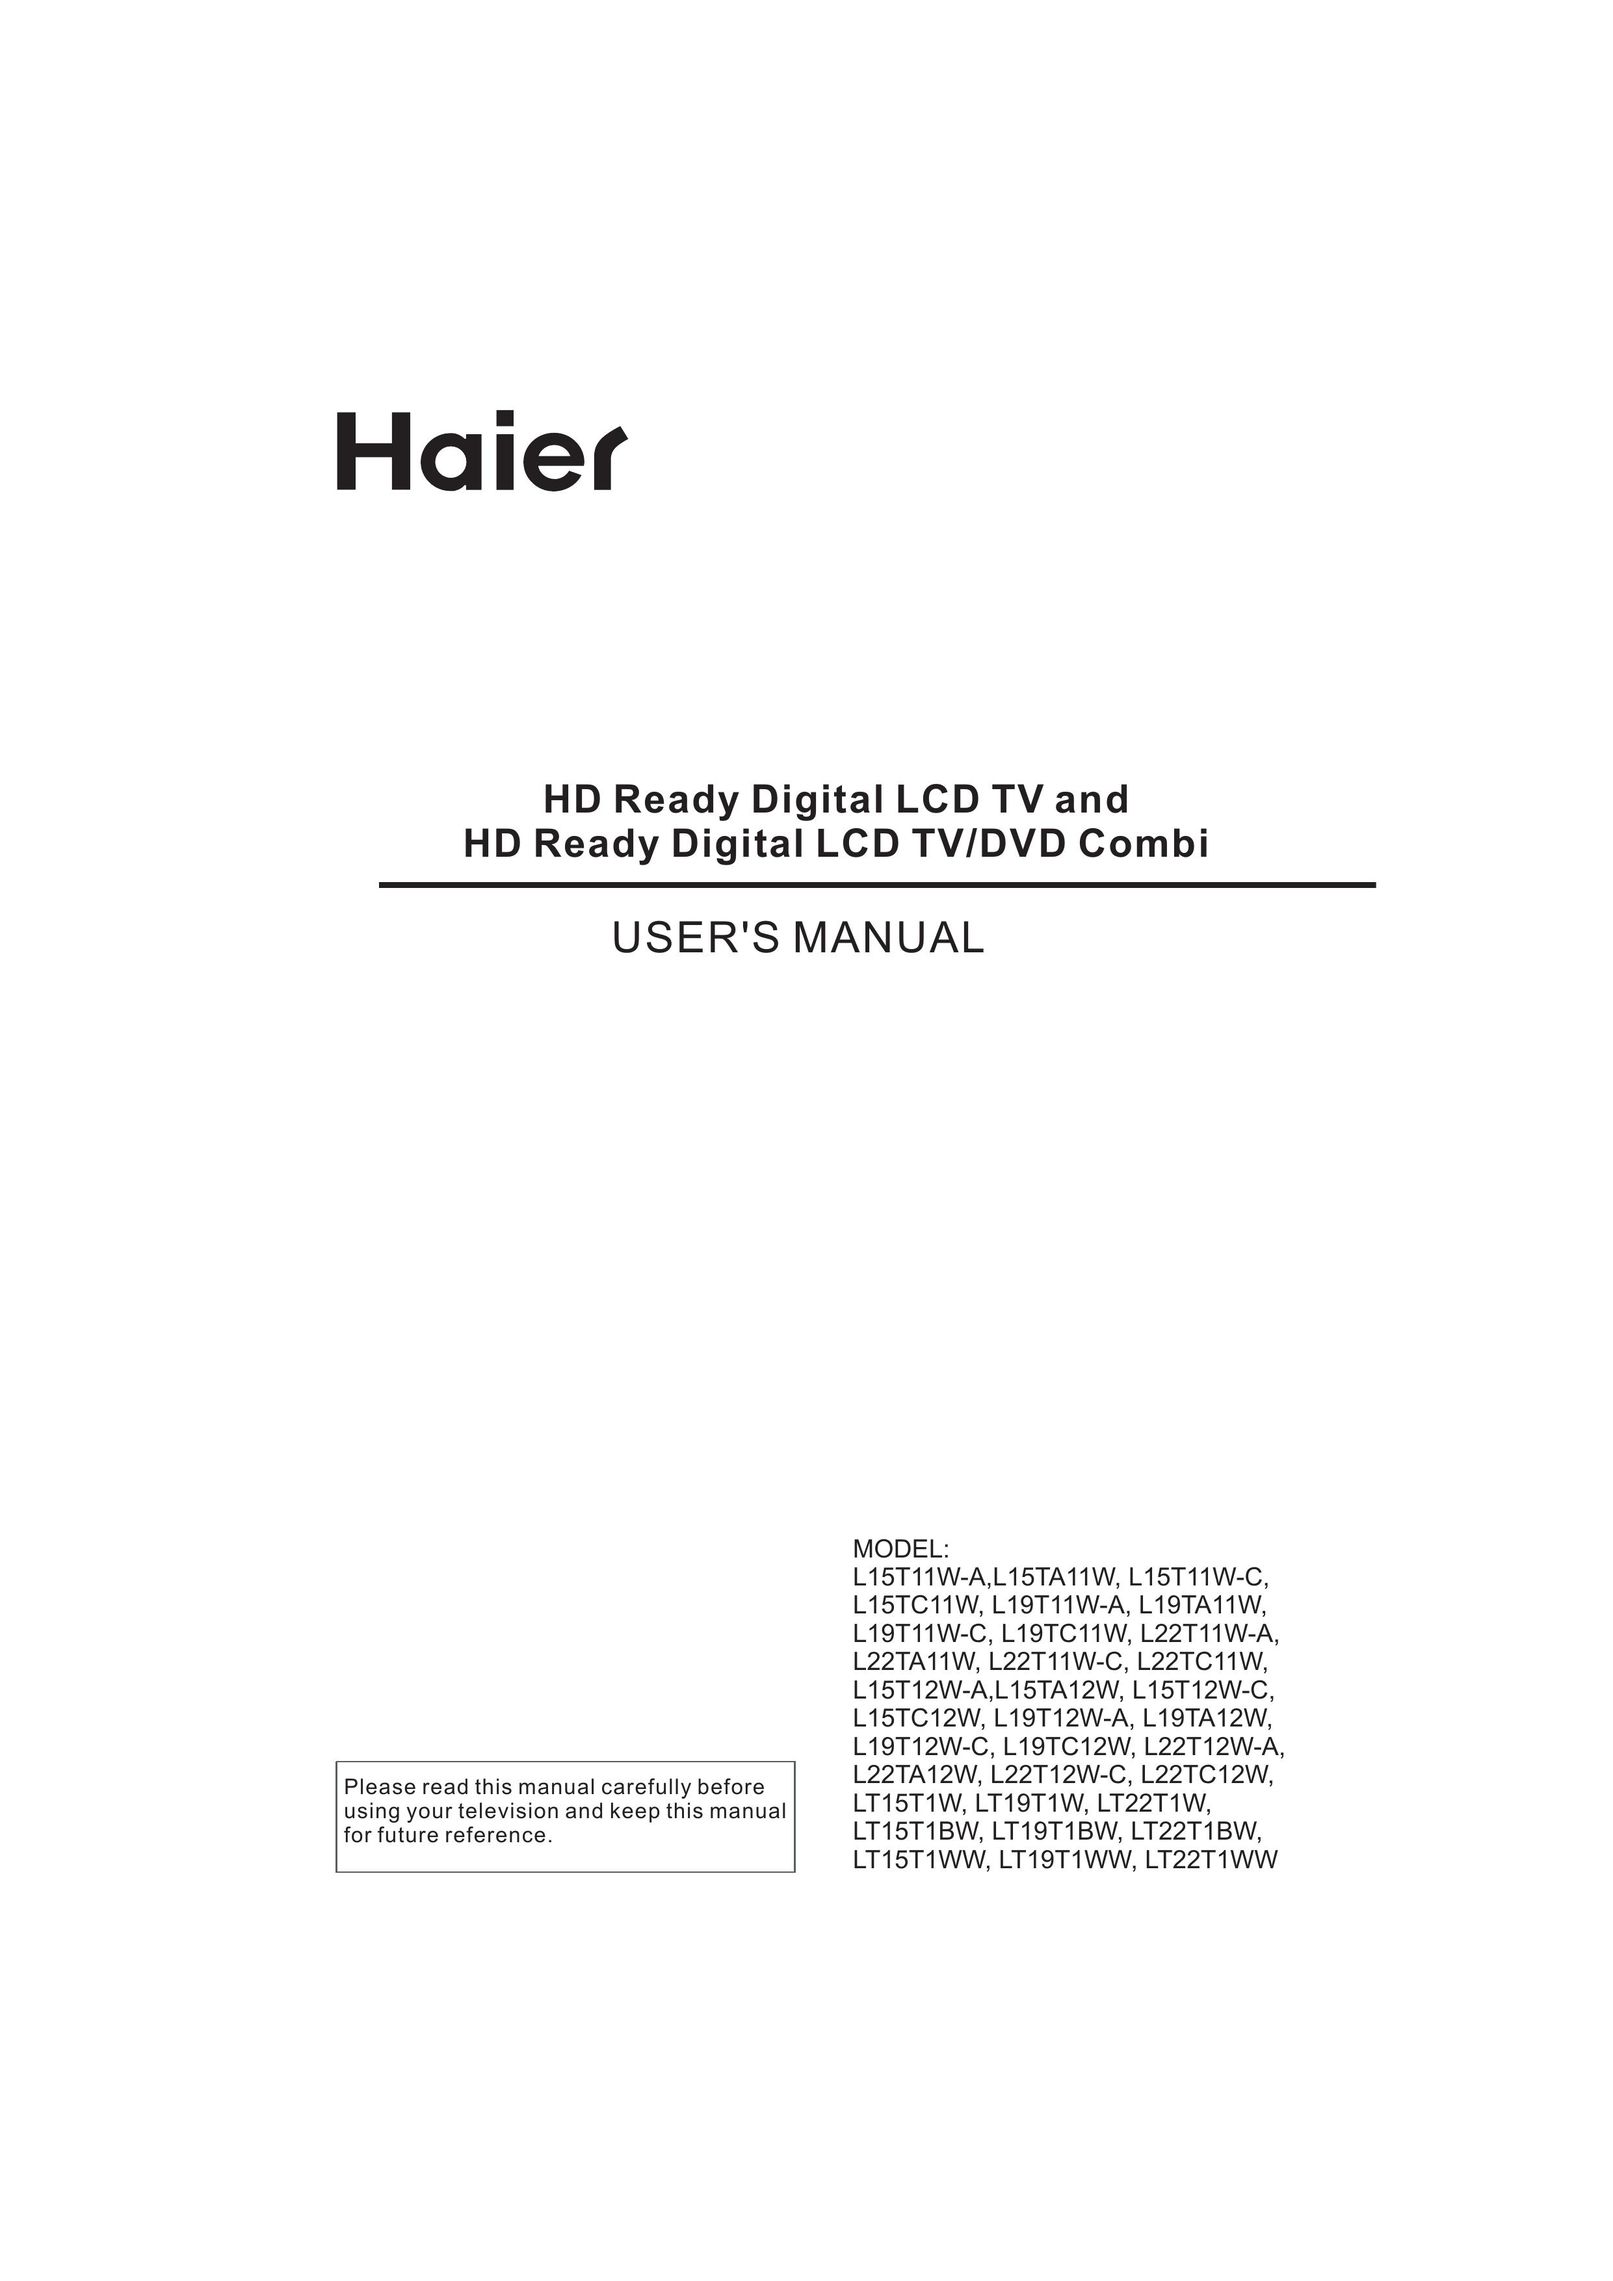 Haier L19TC12W TV DVD Combo User Manual